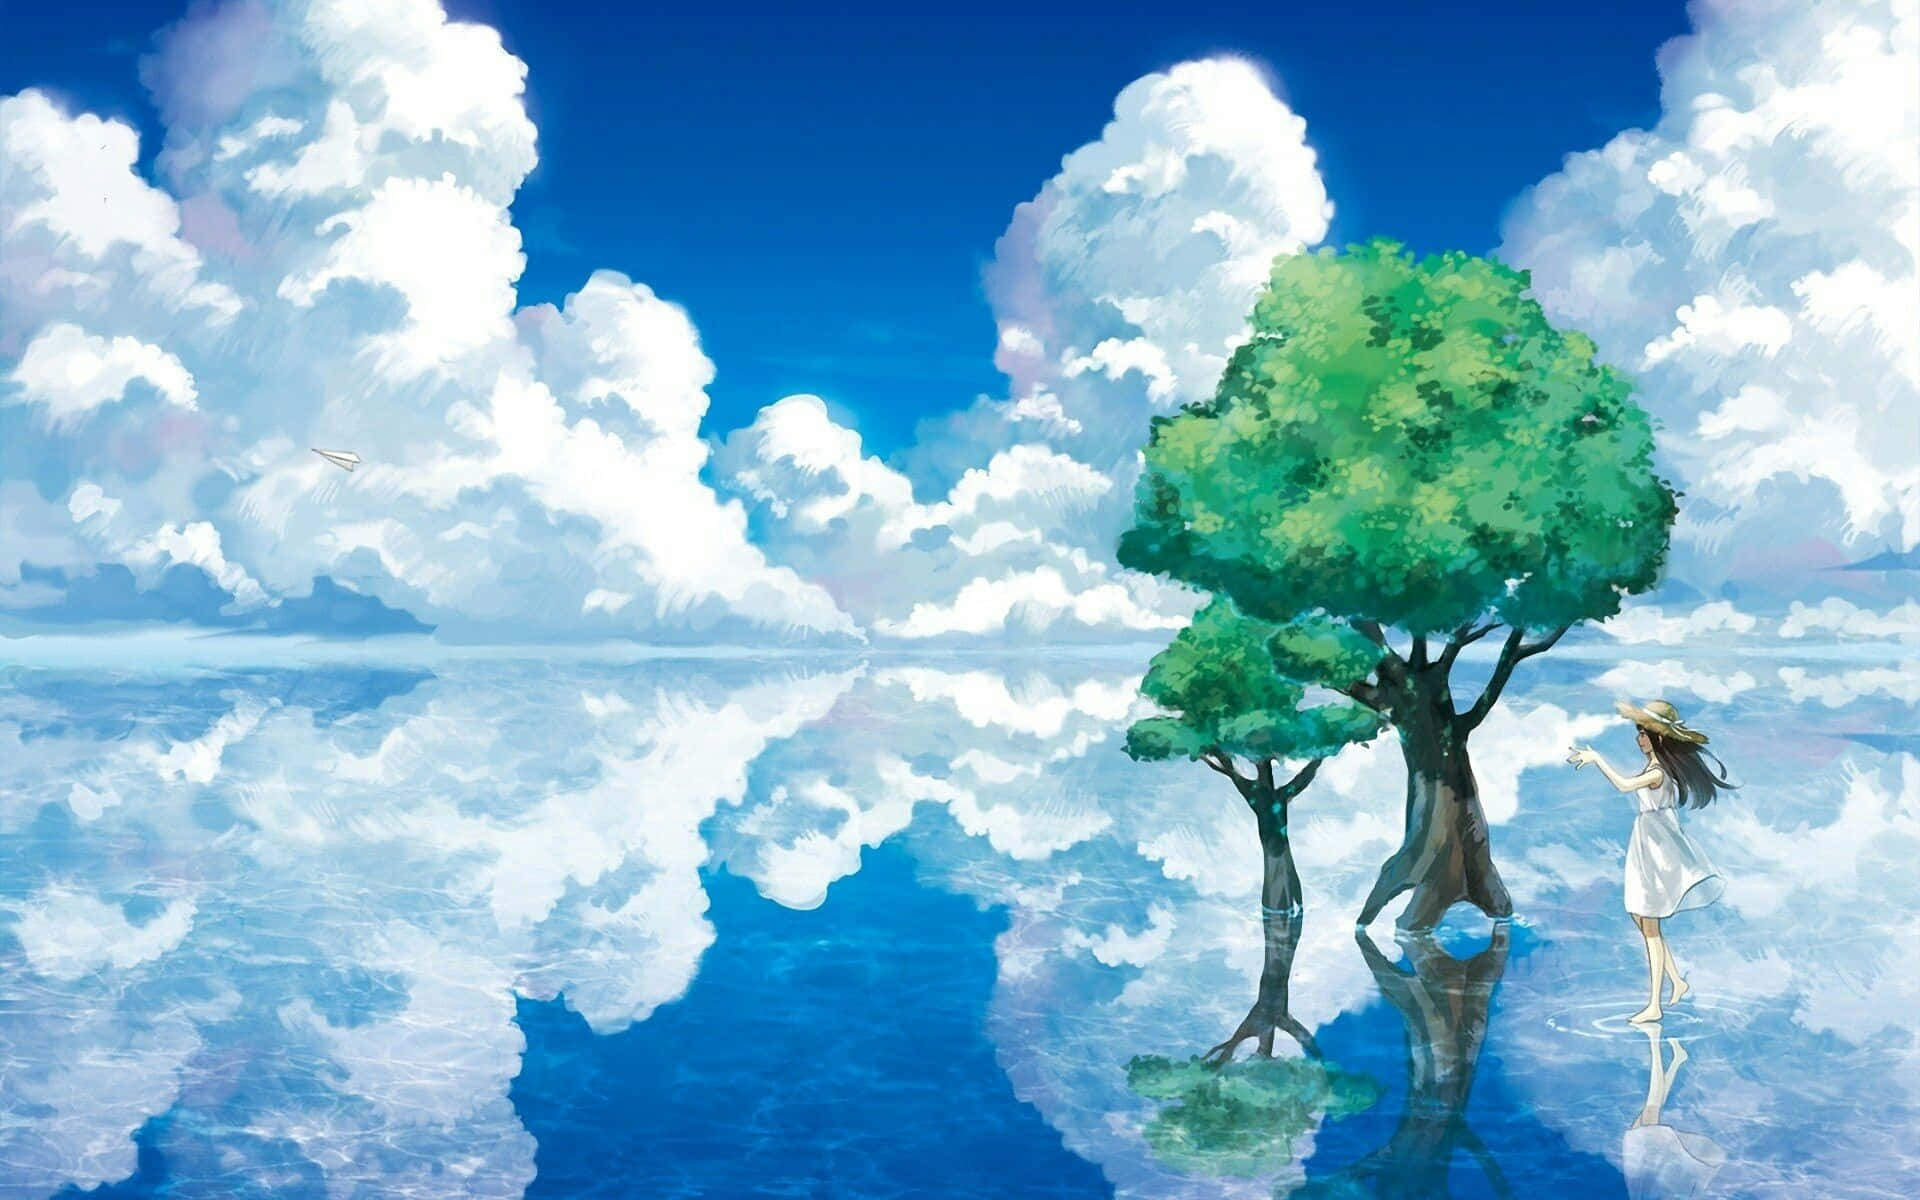 Enjoy The Beauty Of An Anime-filled Sky